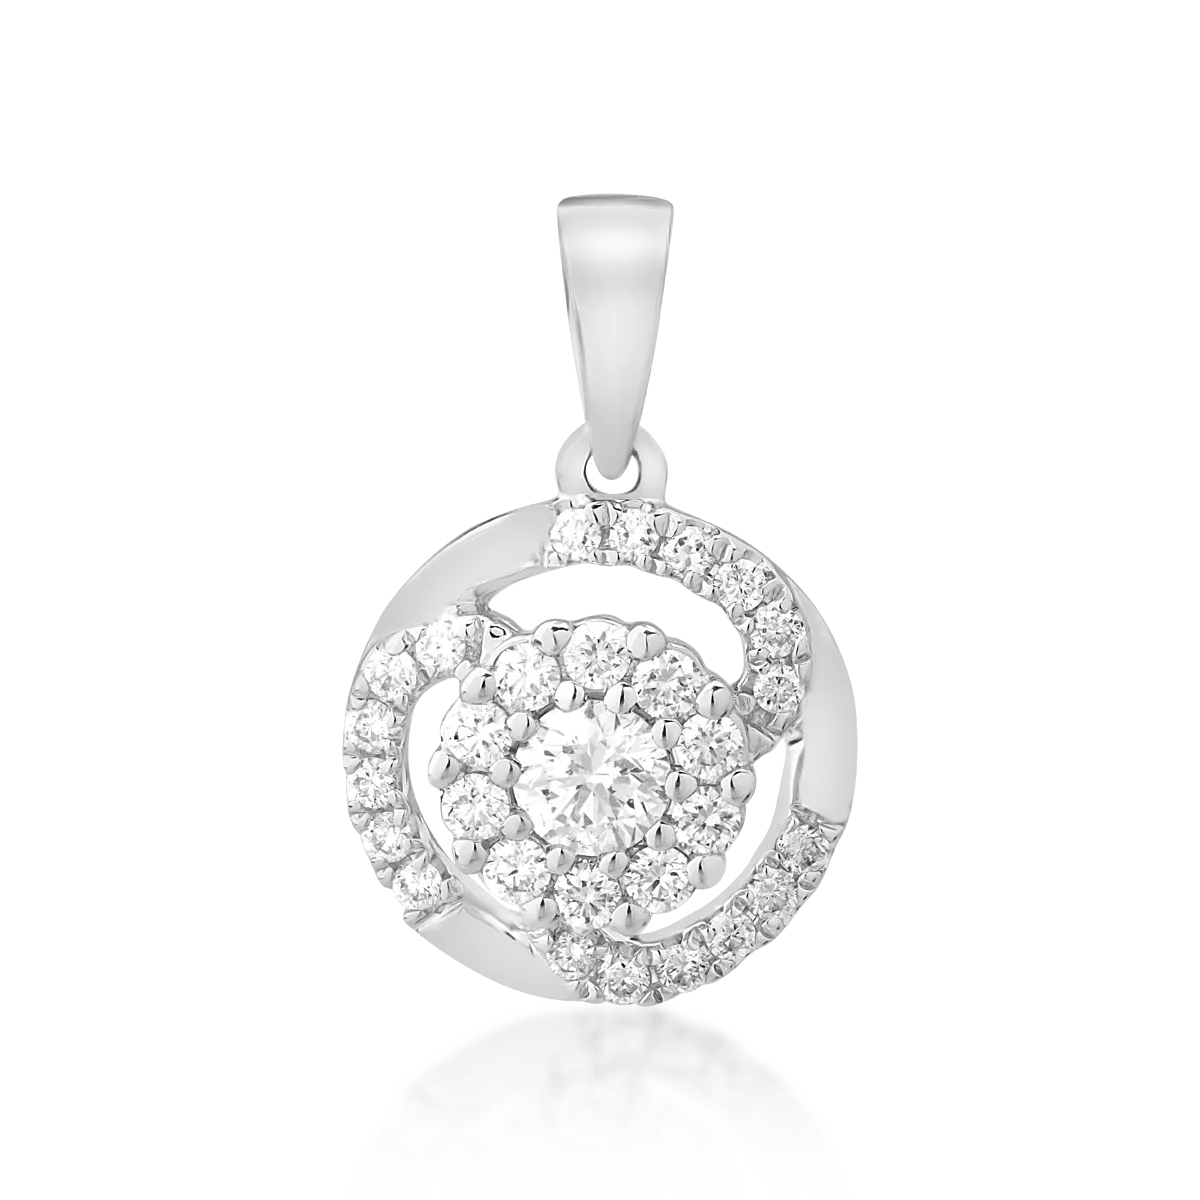 14K white gold pendant with 0.1ct diamond and 0.15ct diamonds